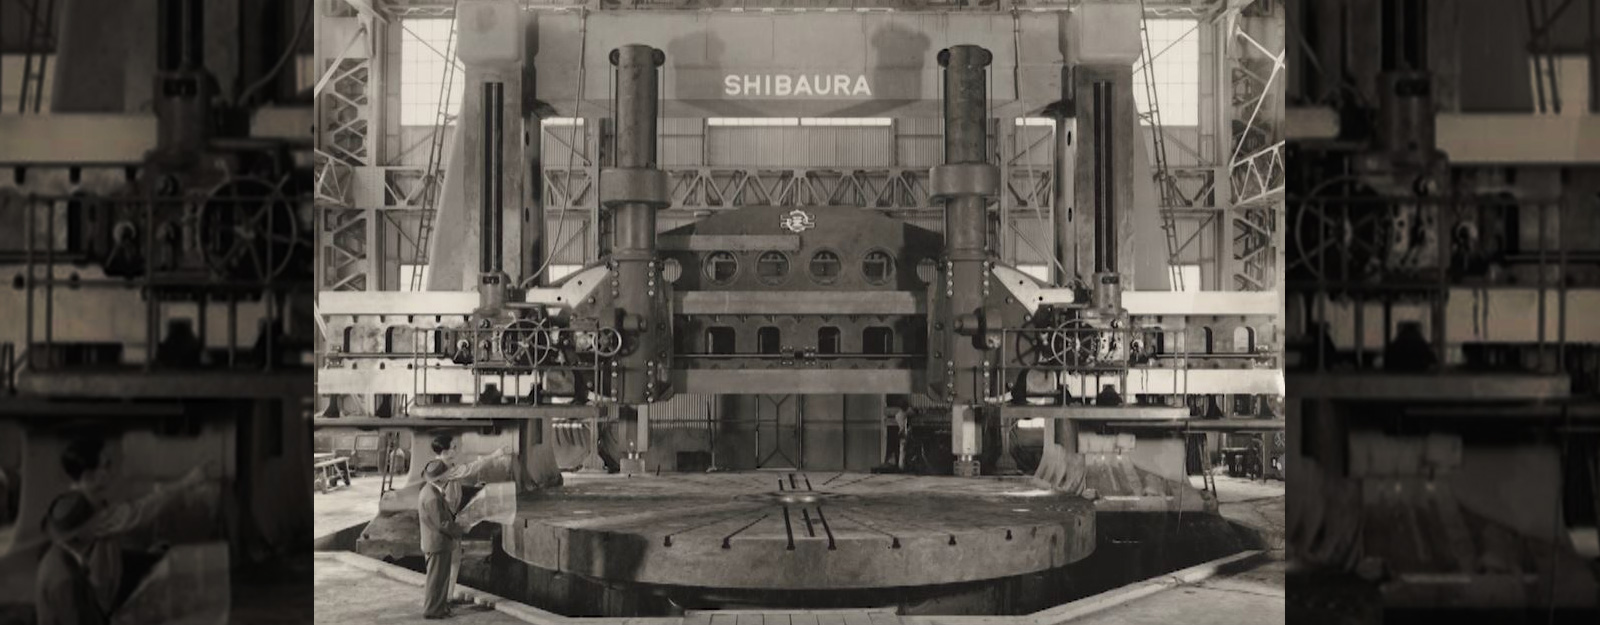 Shibaura Machine History Episode Zero Cover